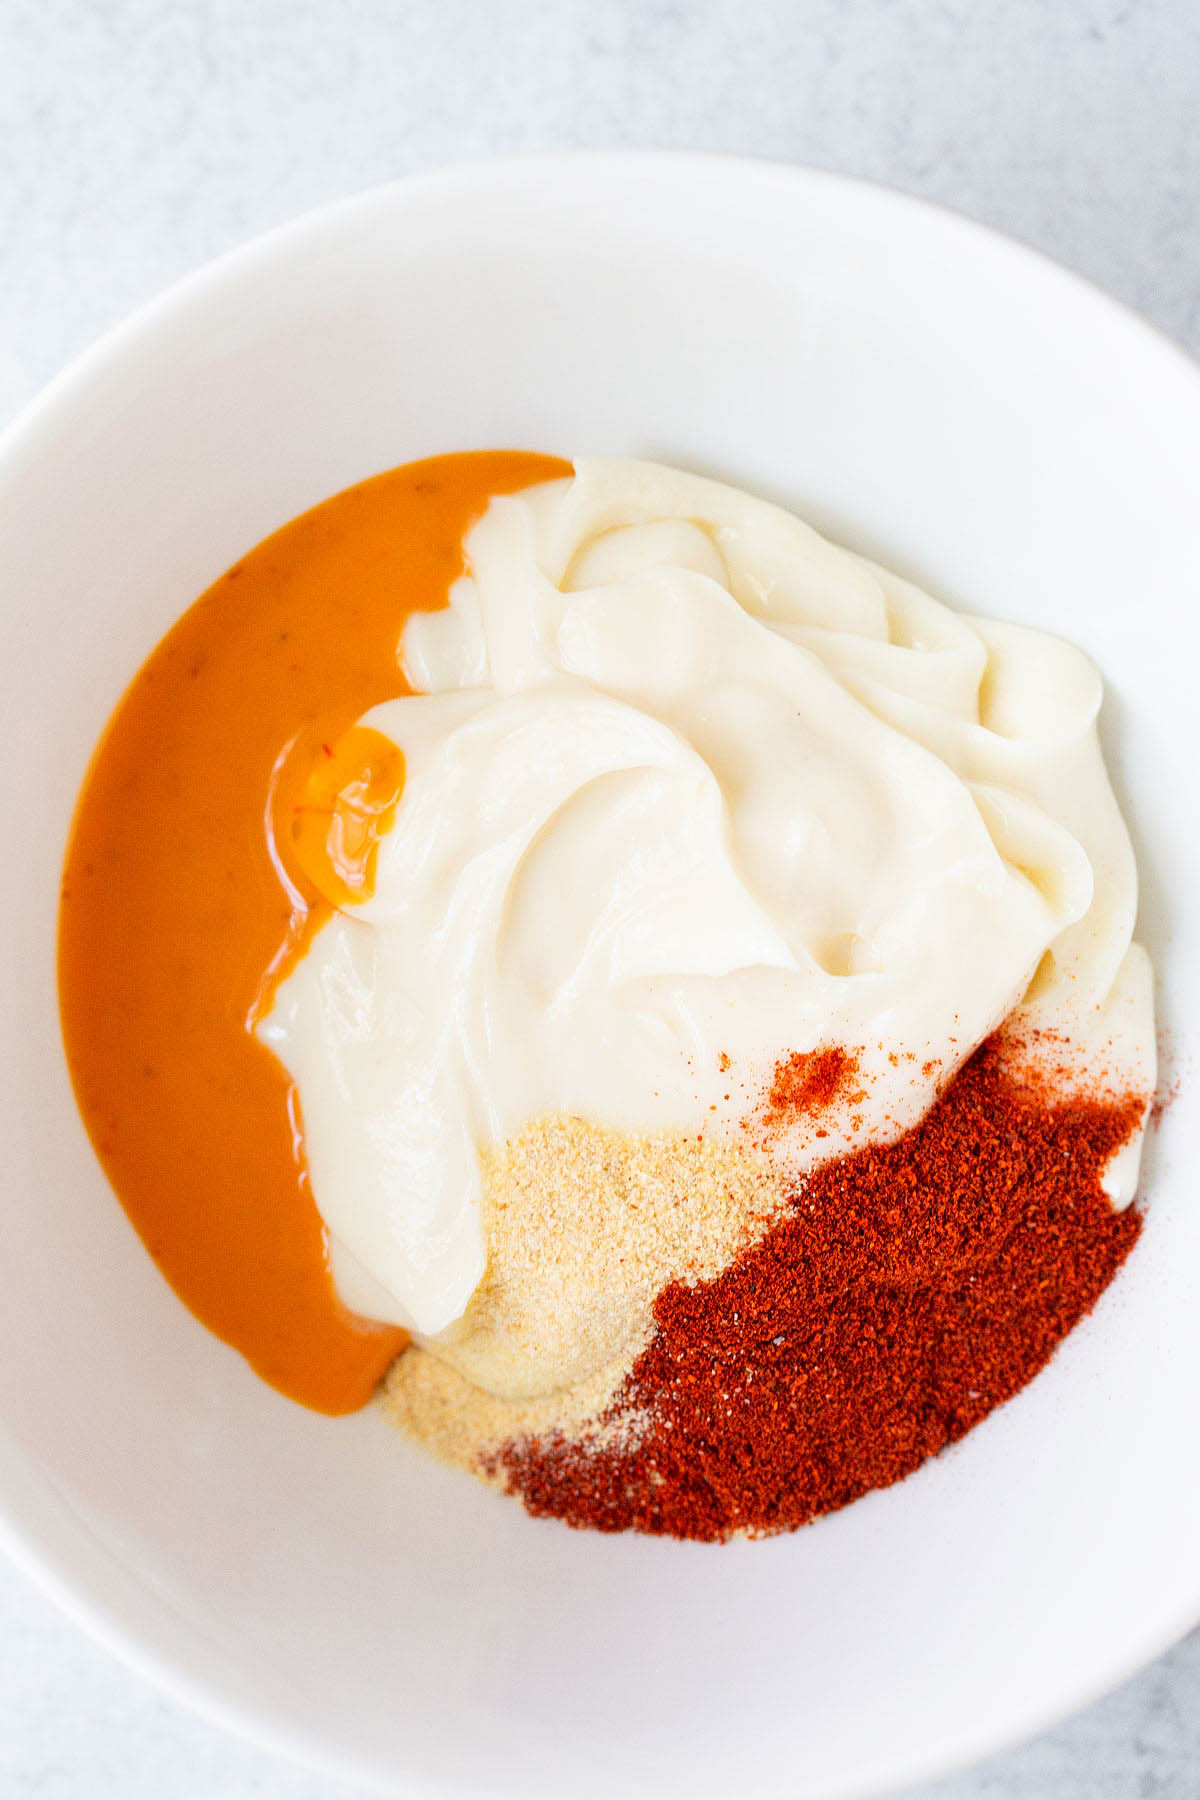 Peri peri mayo ingredients in a white bowl.